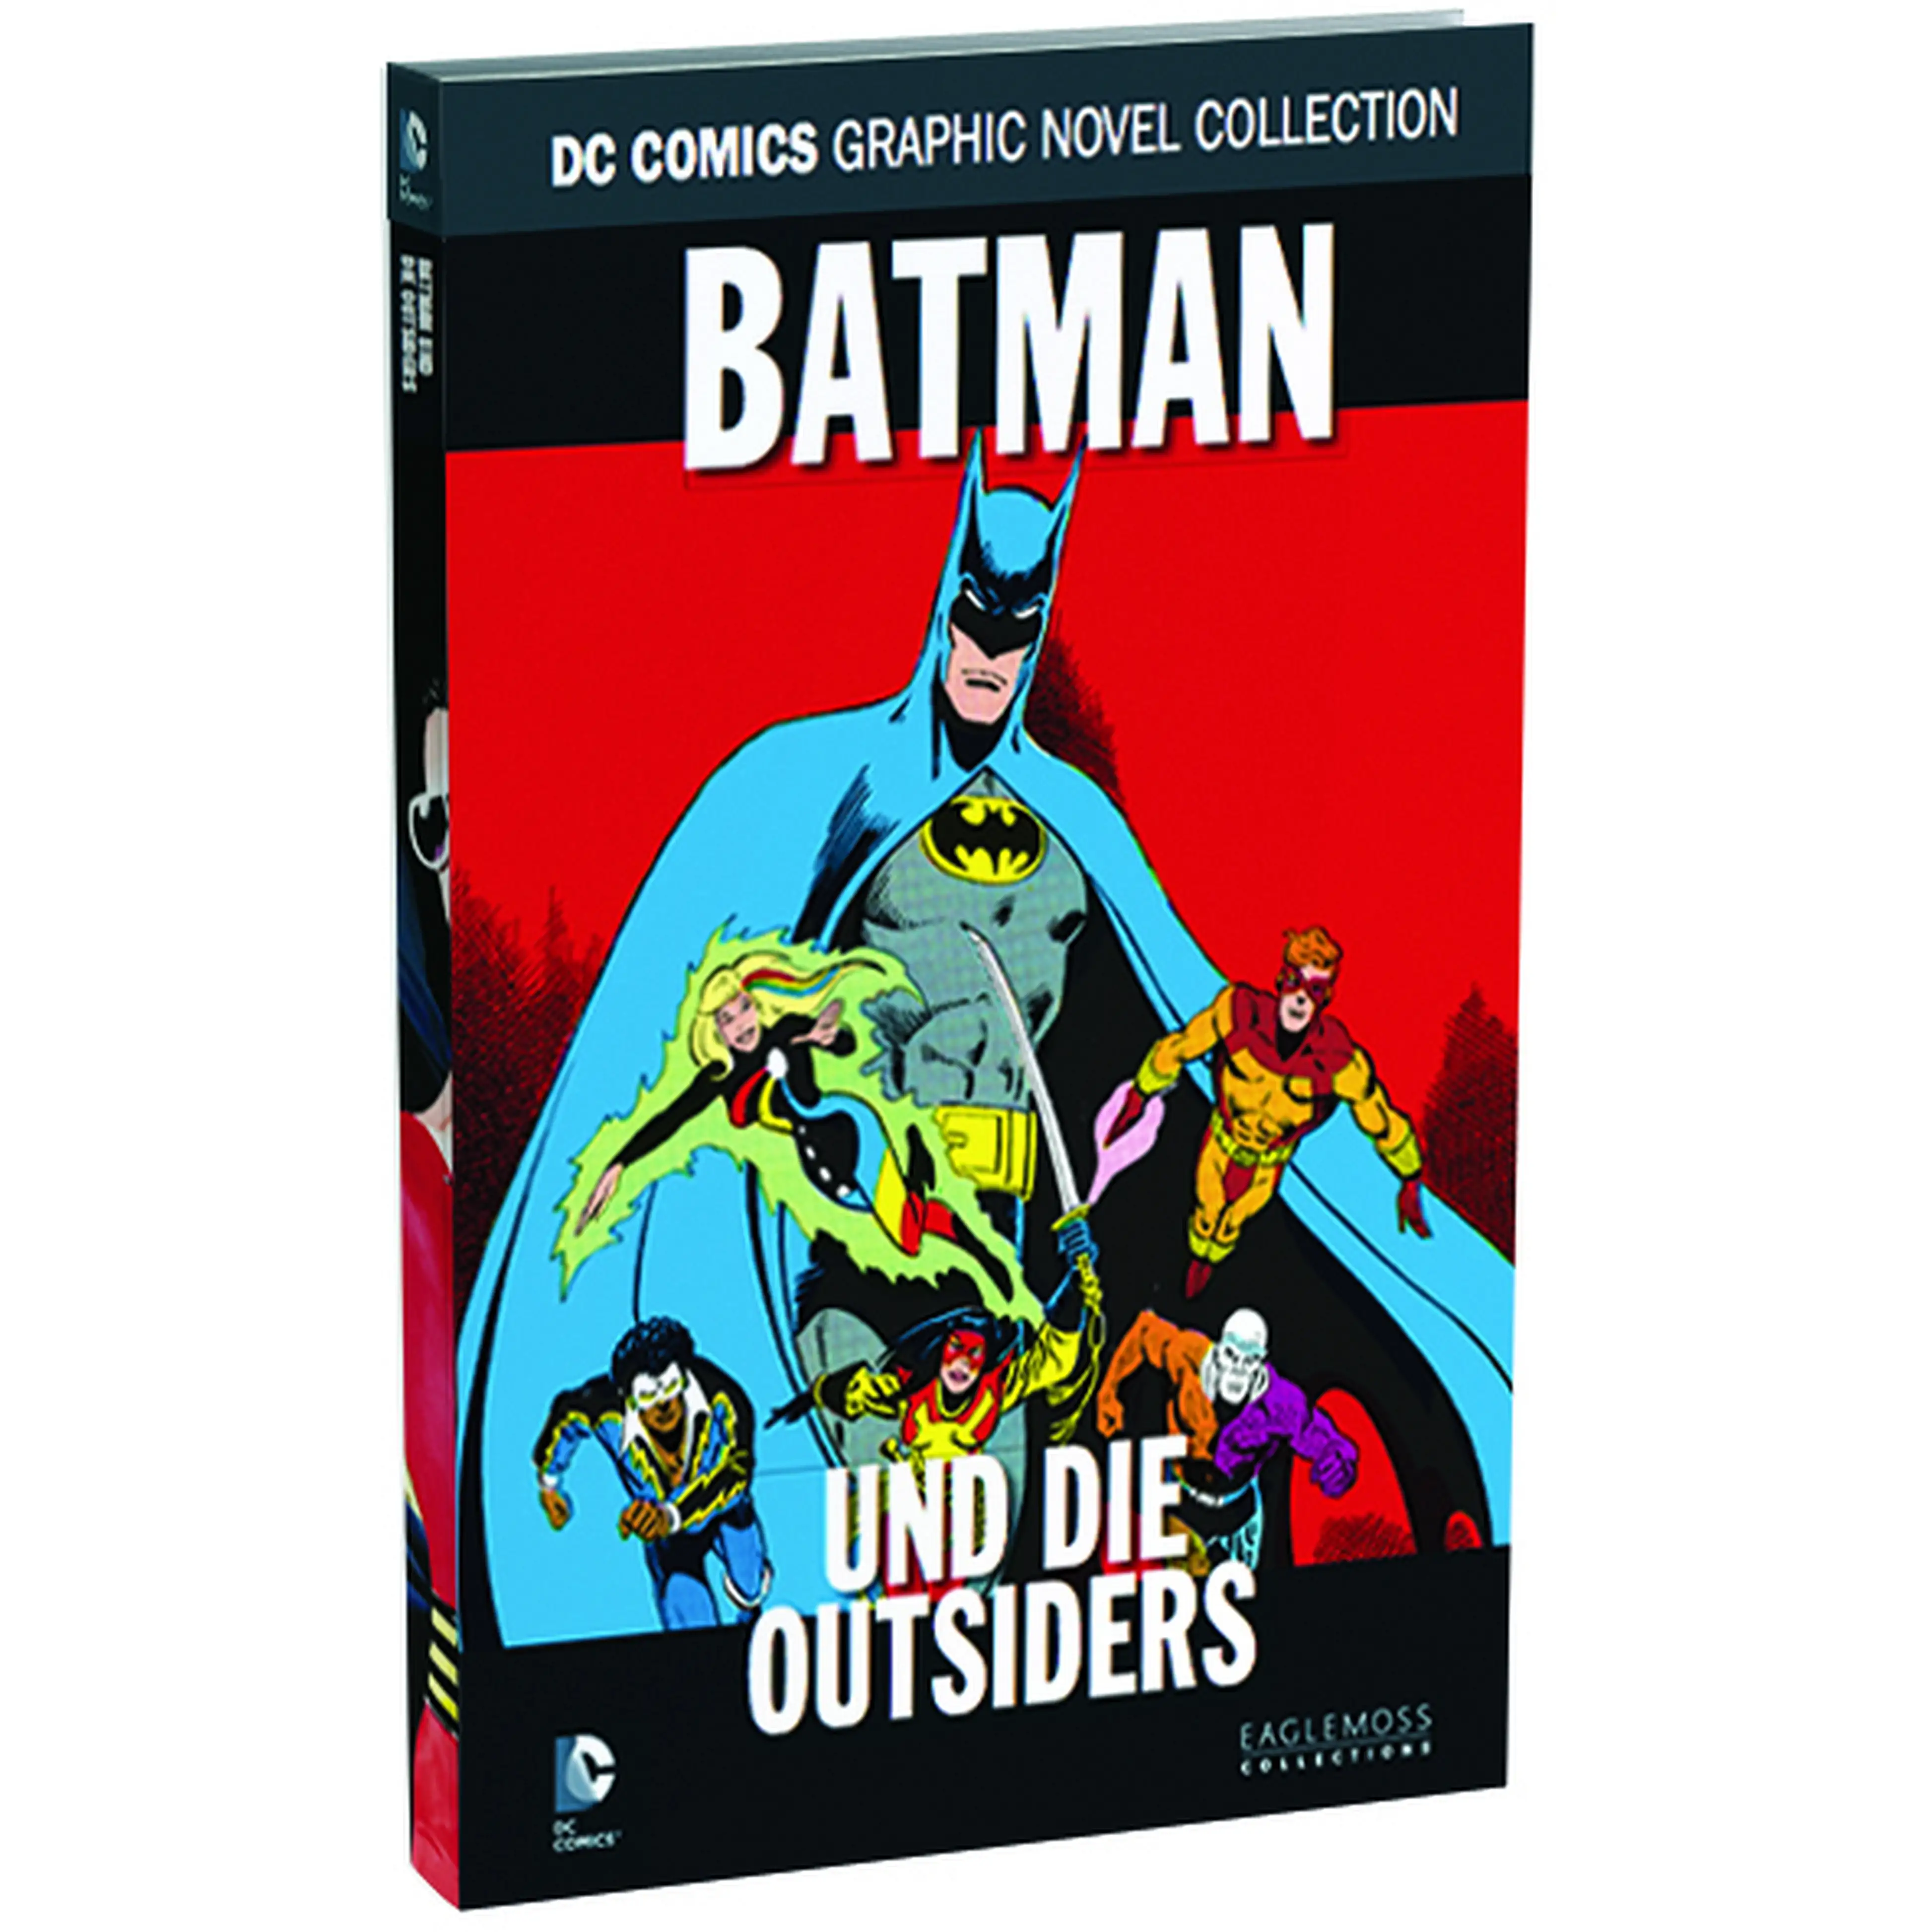 DC Comics Graphic Novel Collection Batman - Und die Outsiders